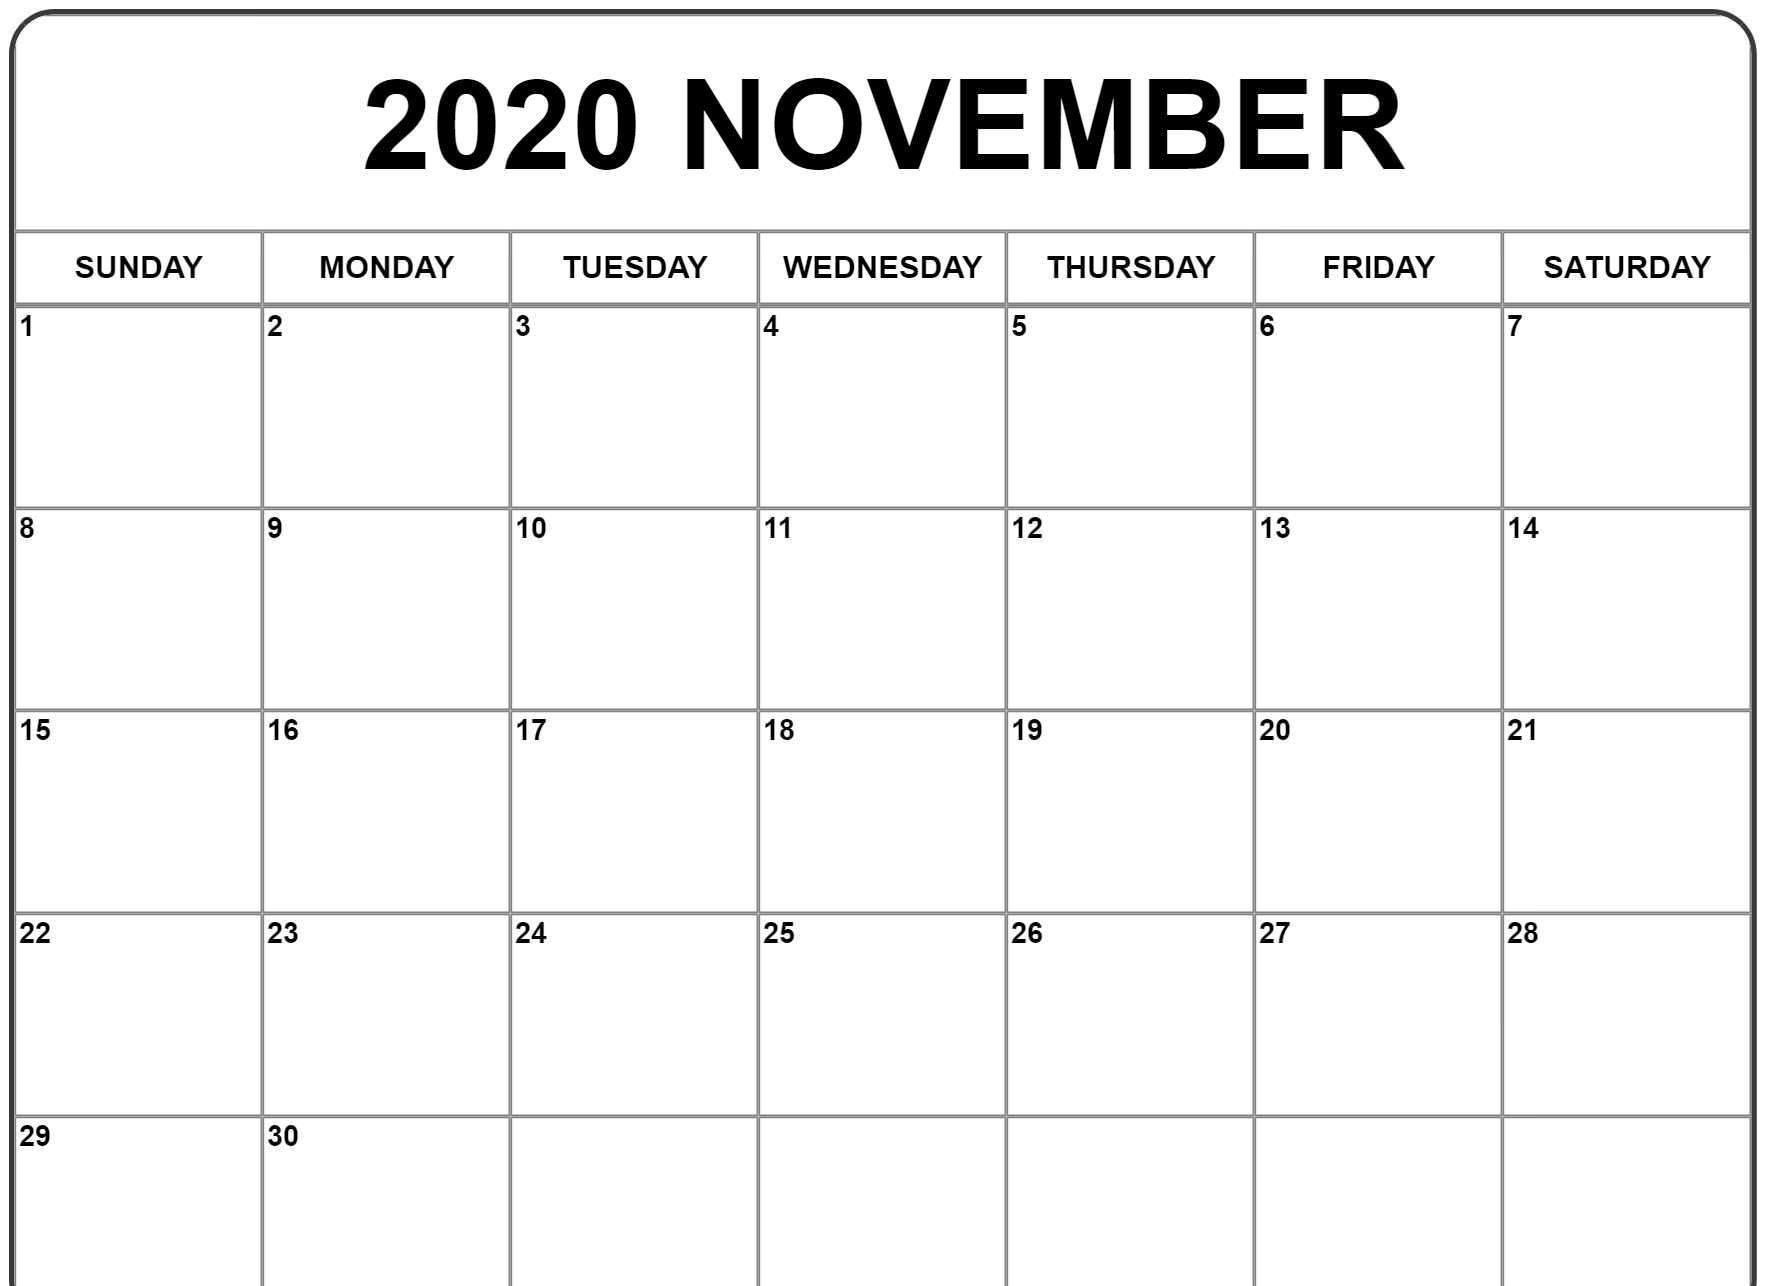 November 2020 Calendar | Monthly Calendar Template, Online Exceptional 2020 Calendar For November